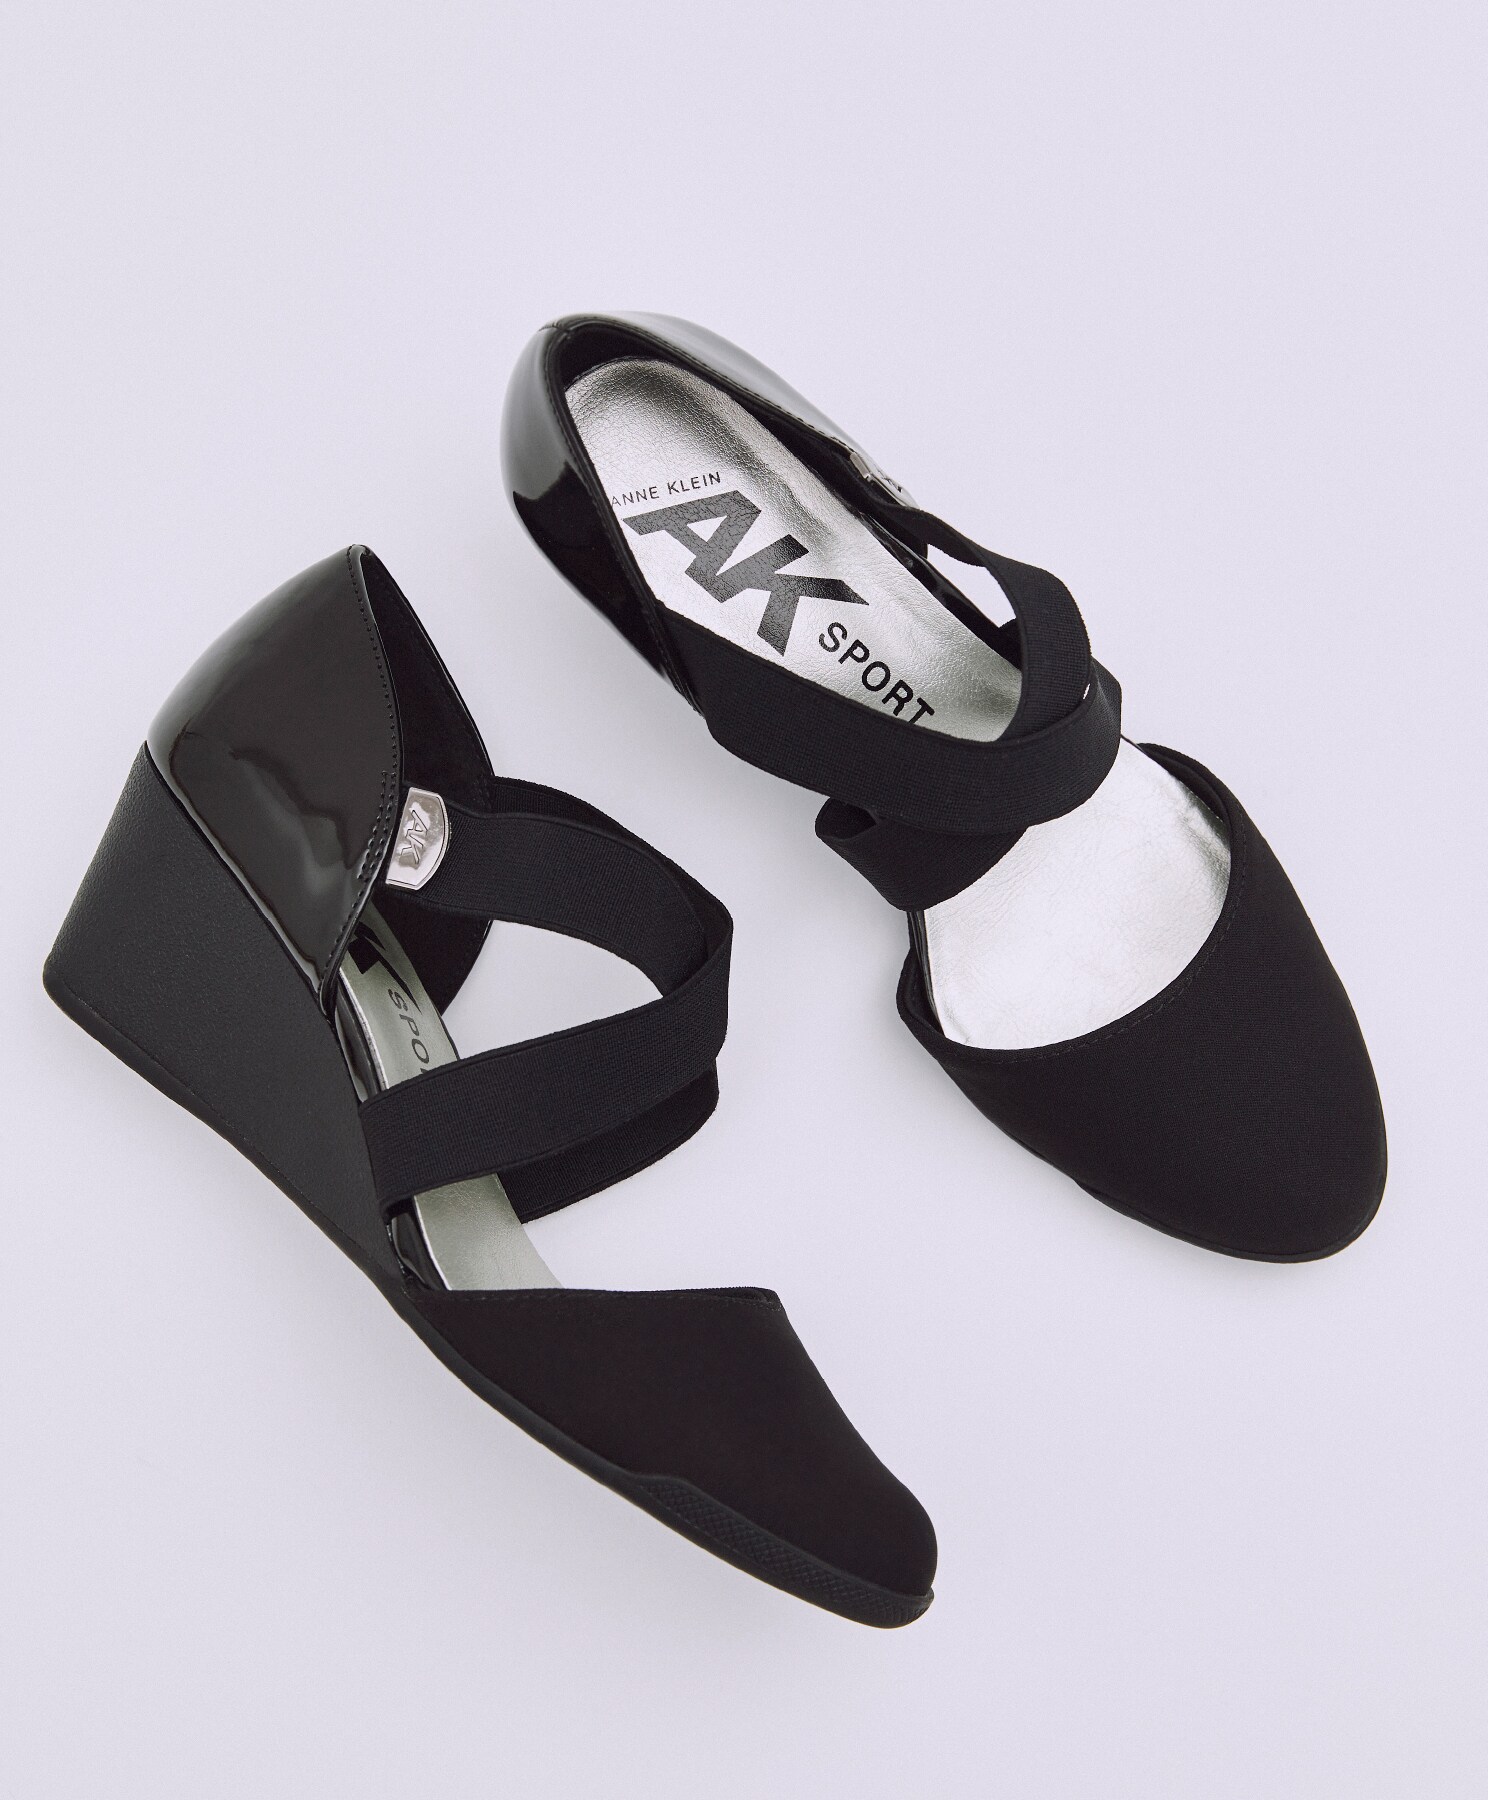 comfortable black dress shoes for women